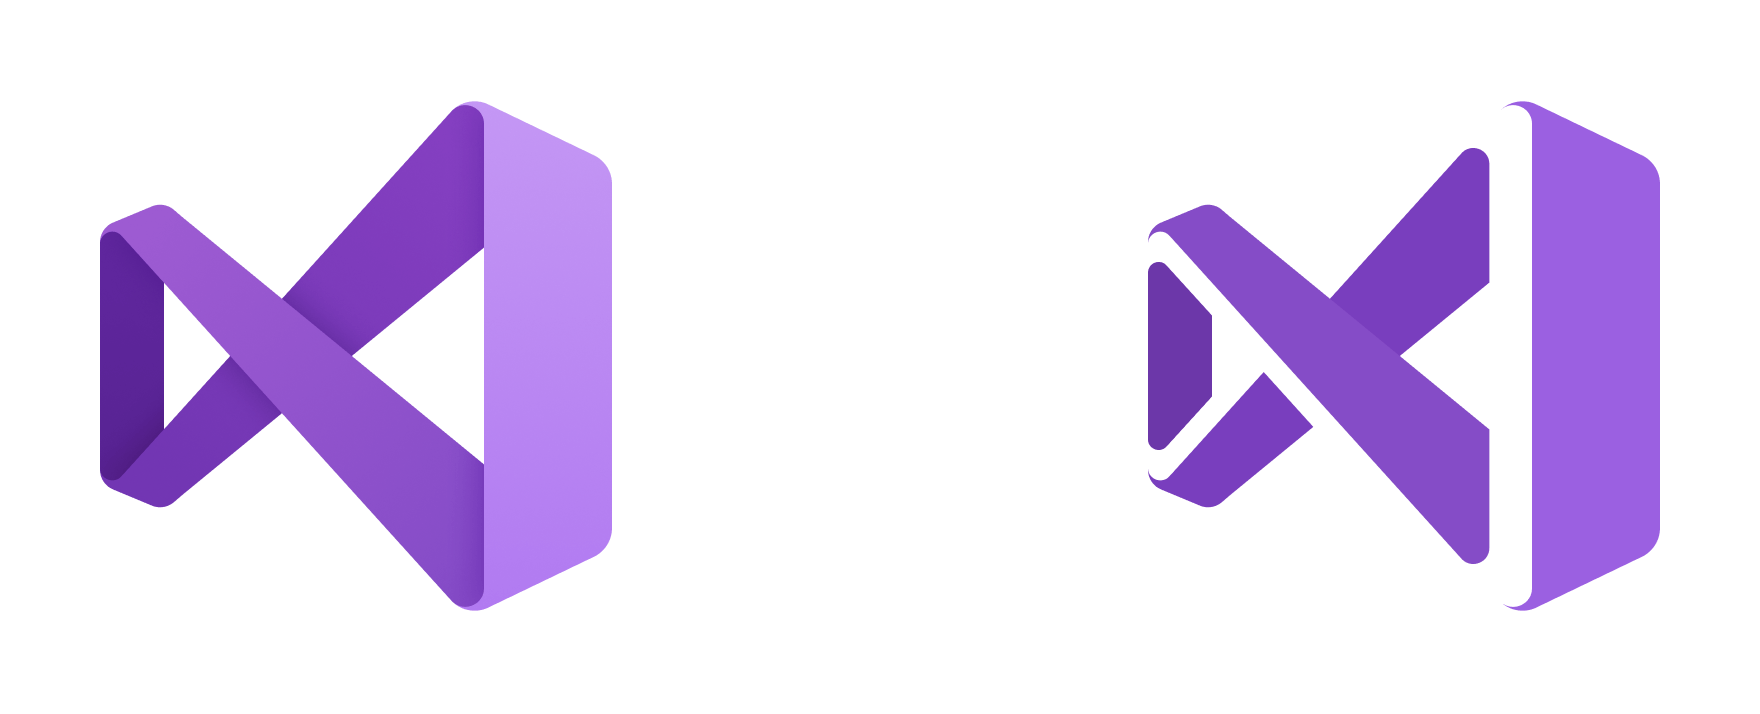 Update Logo - New icon like Visual Studio 2019 · Issue #69803 · microsoft/vscode ...